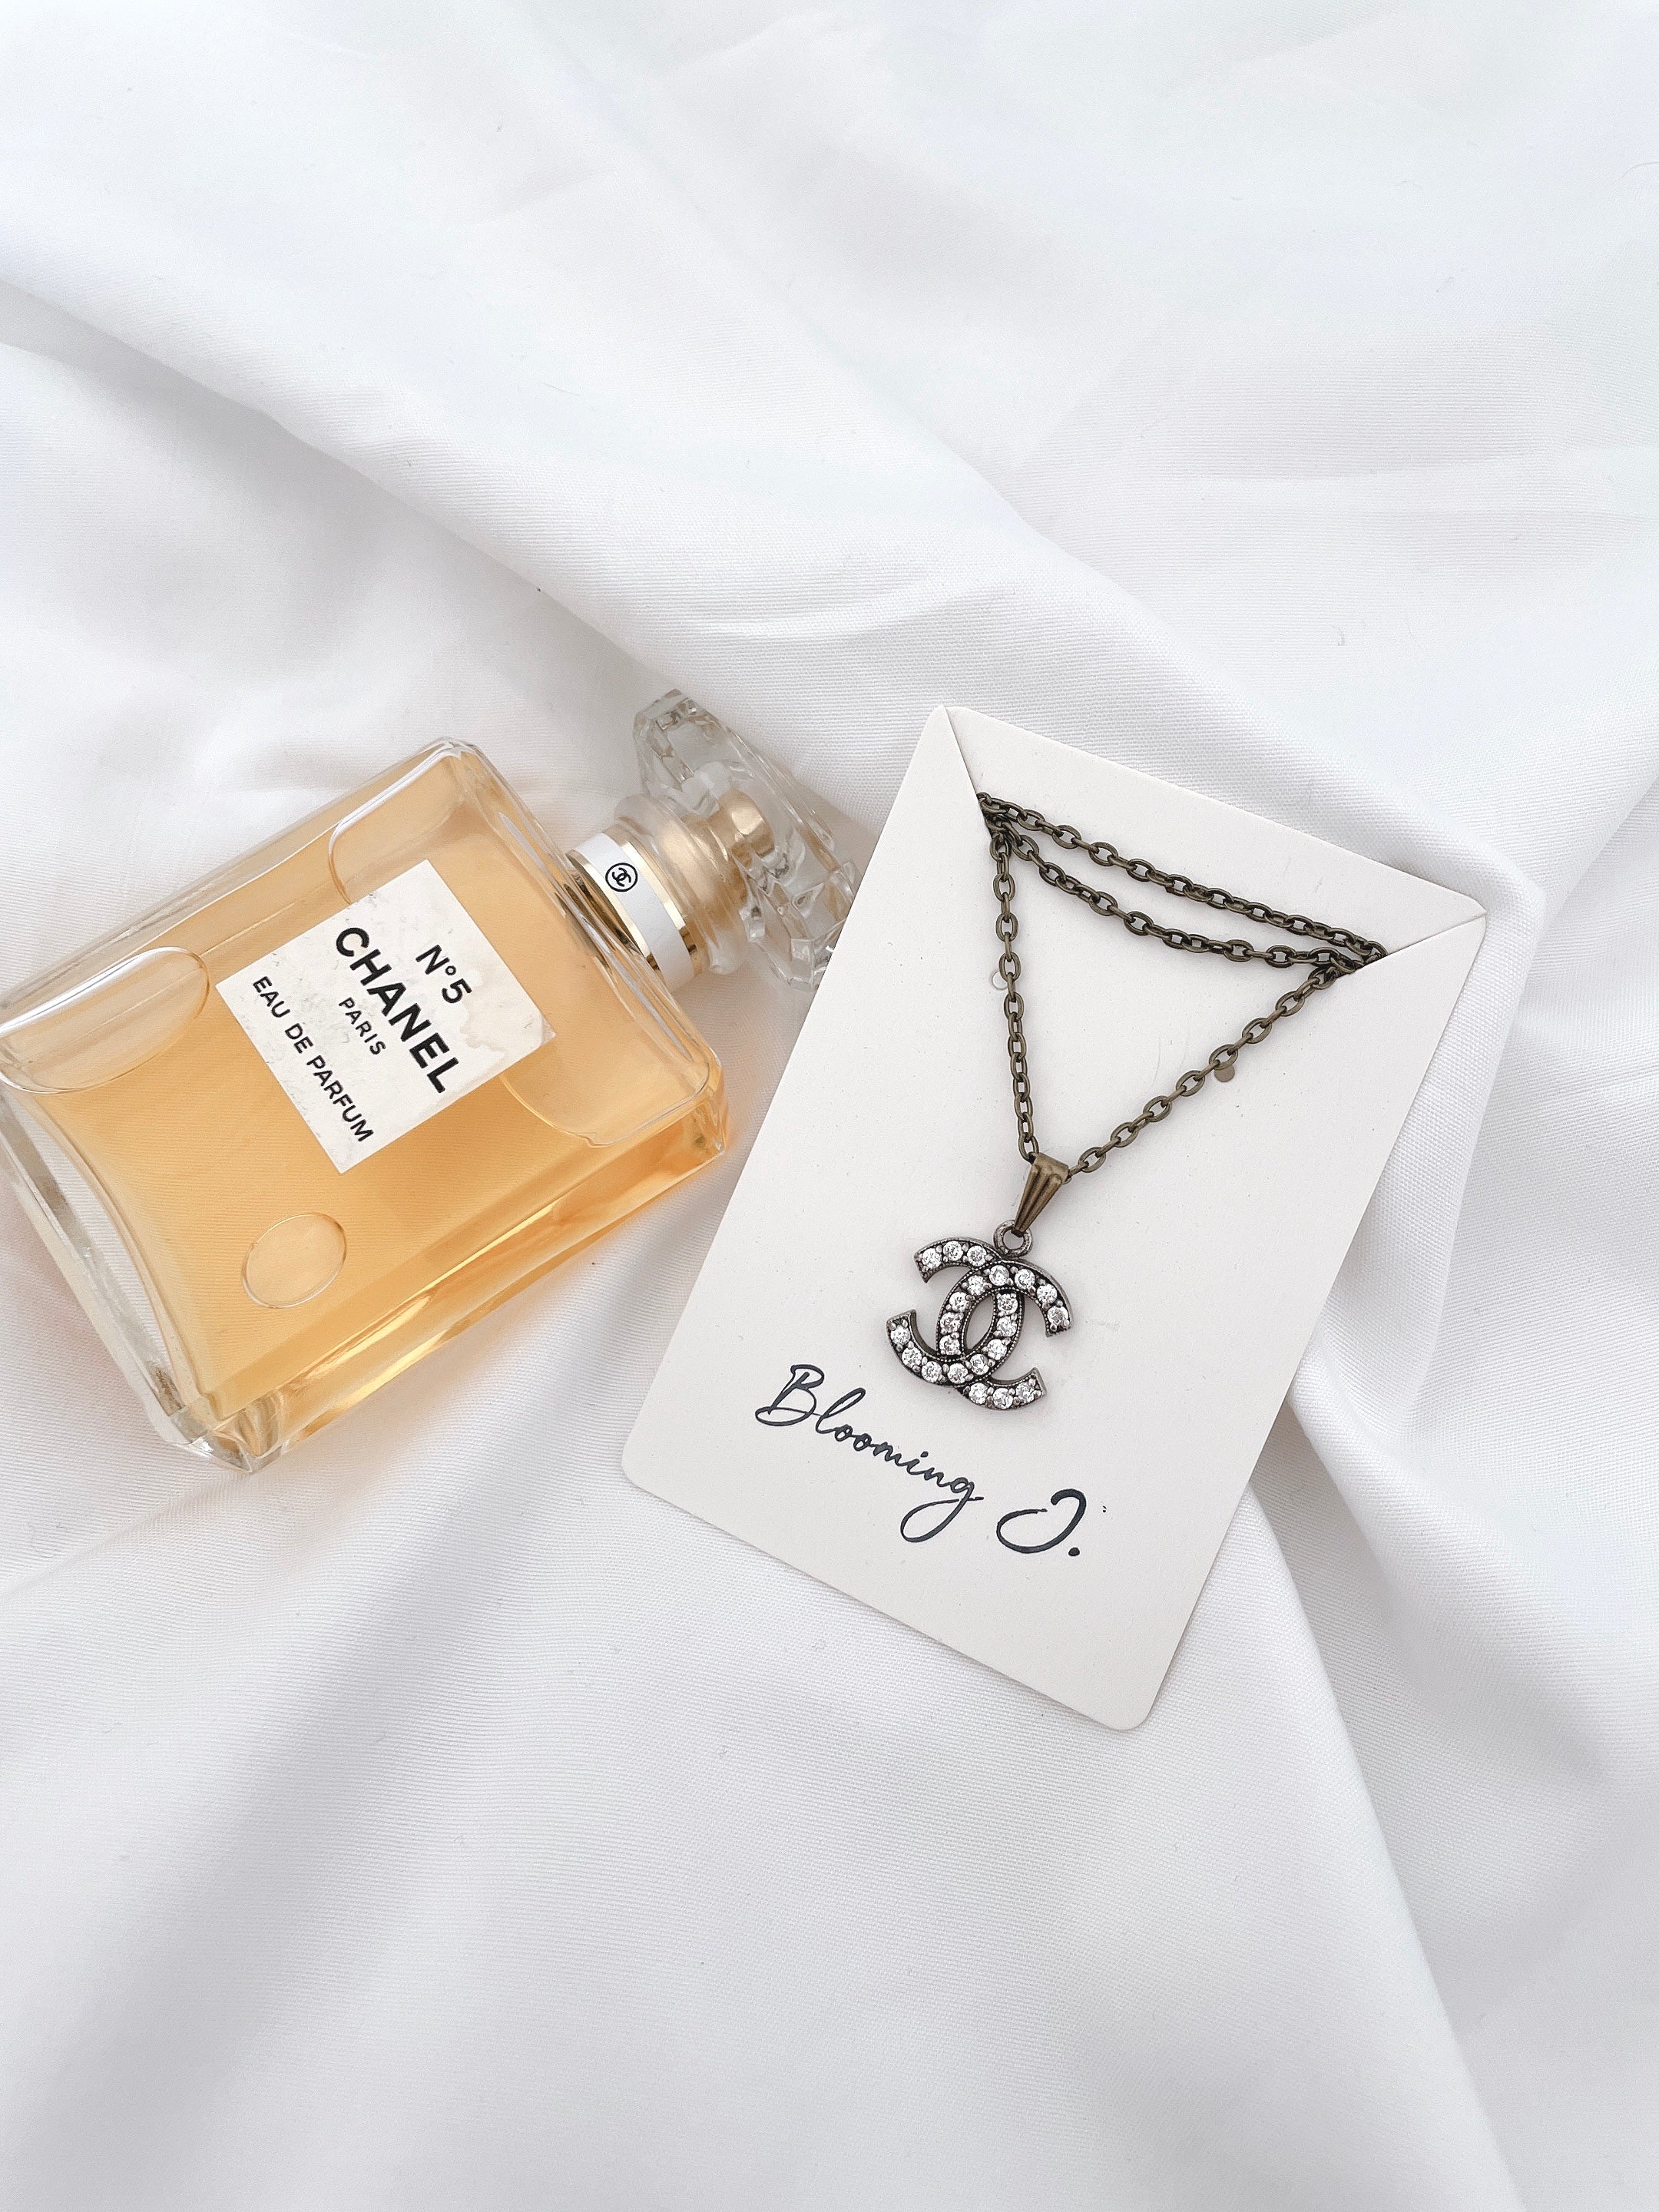 Best Deals for Chanel Button Necklace